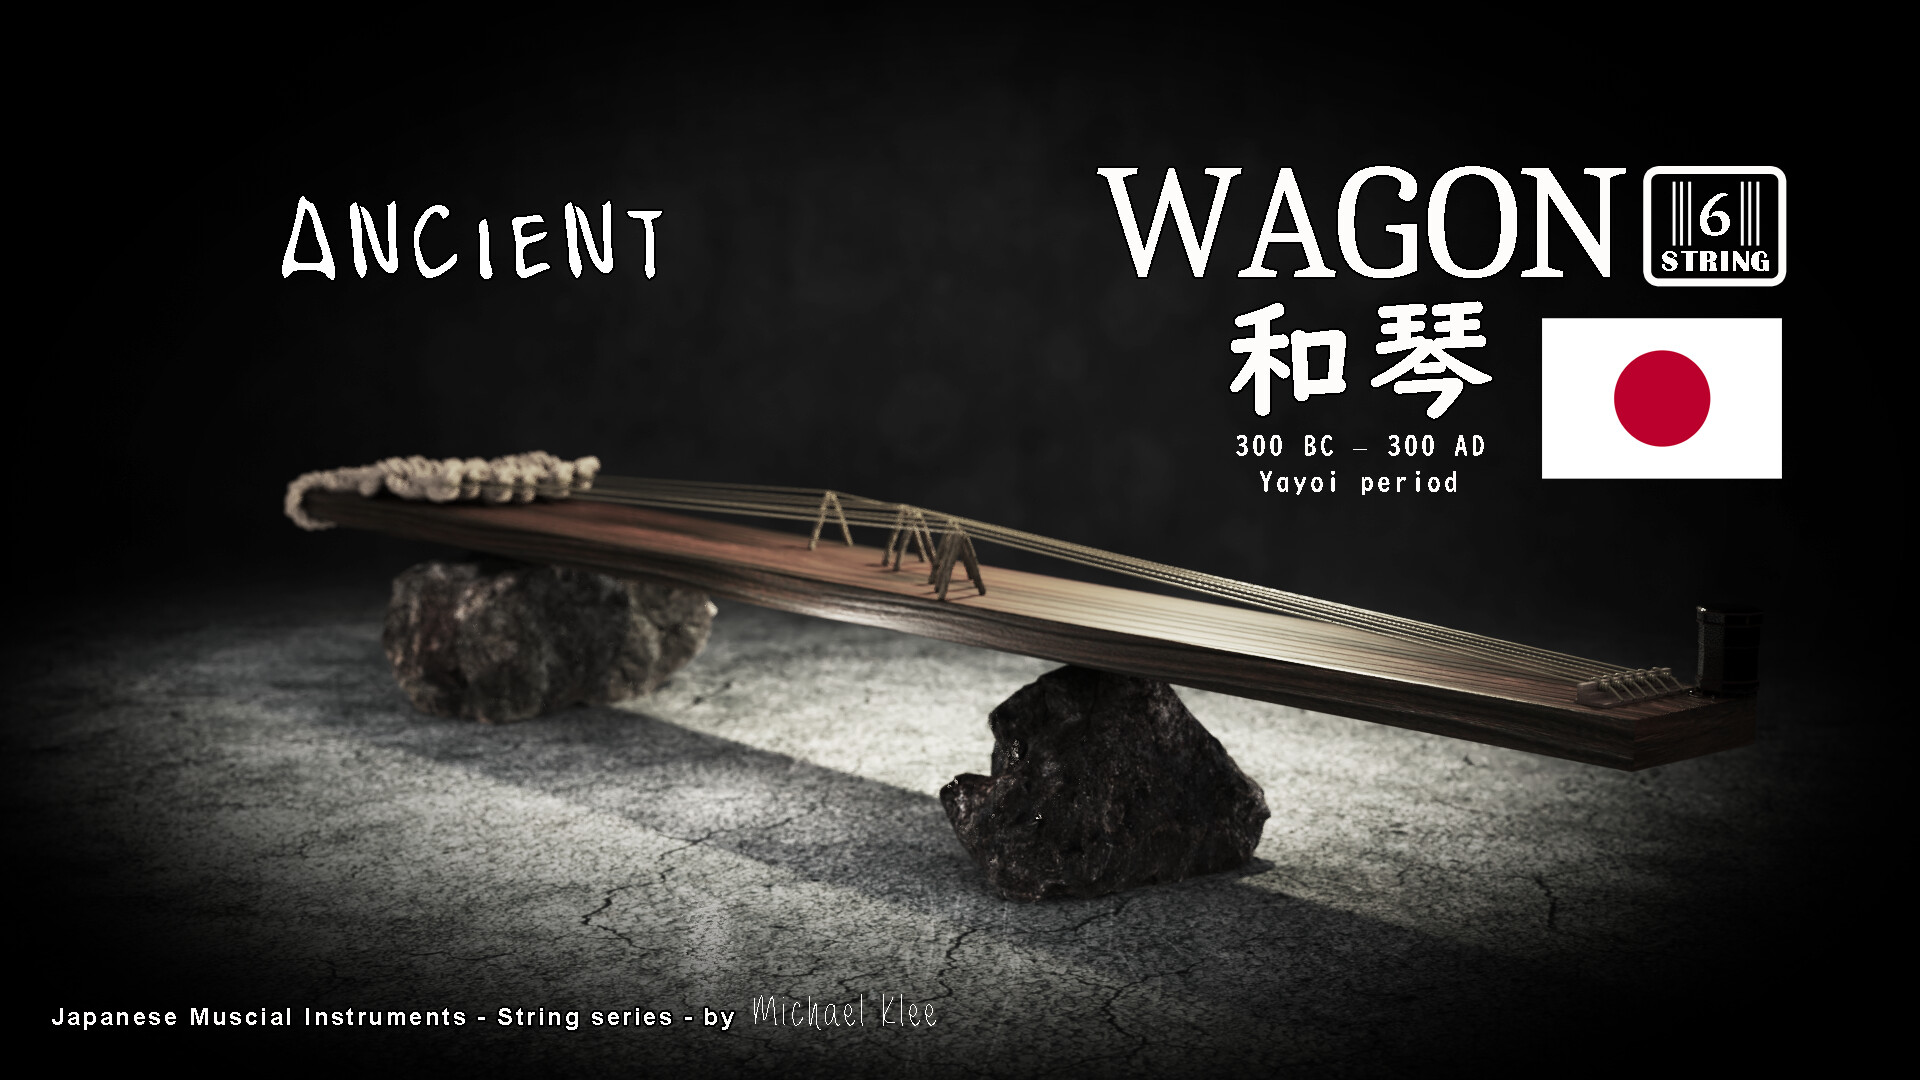 ArtStation - Wagon 和琴Yamato-goto 大和琴Japanese Ancient String Instrument 300  B.C.